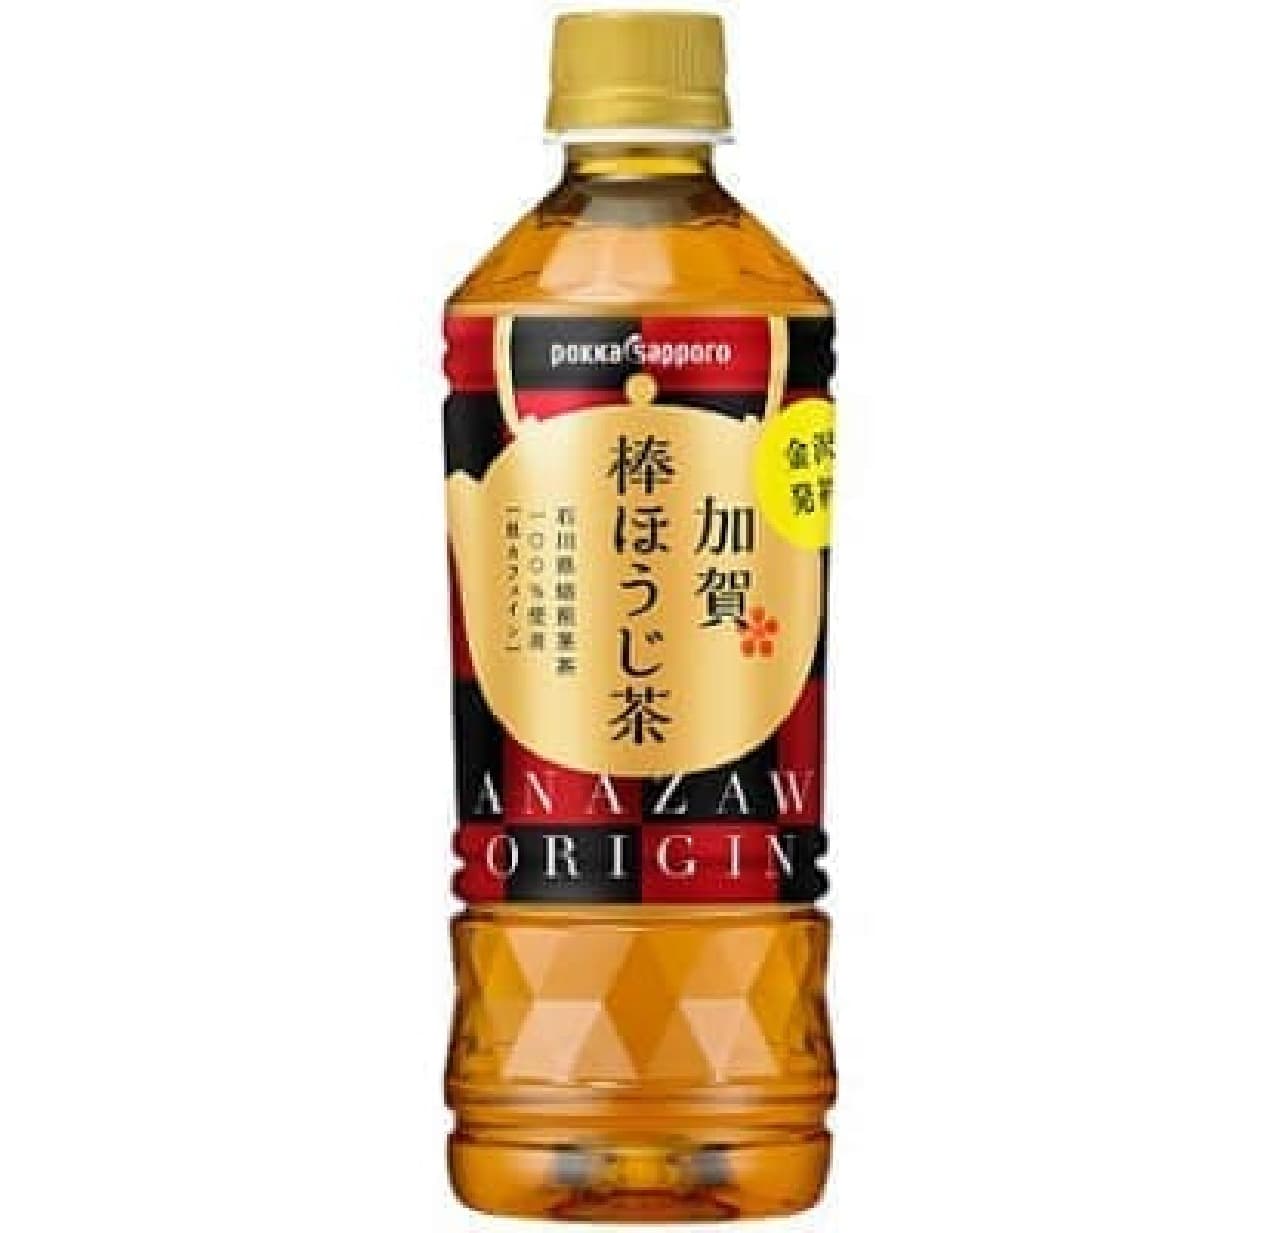 Bar tea originating in Kanazawa is now available in PET bottles!